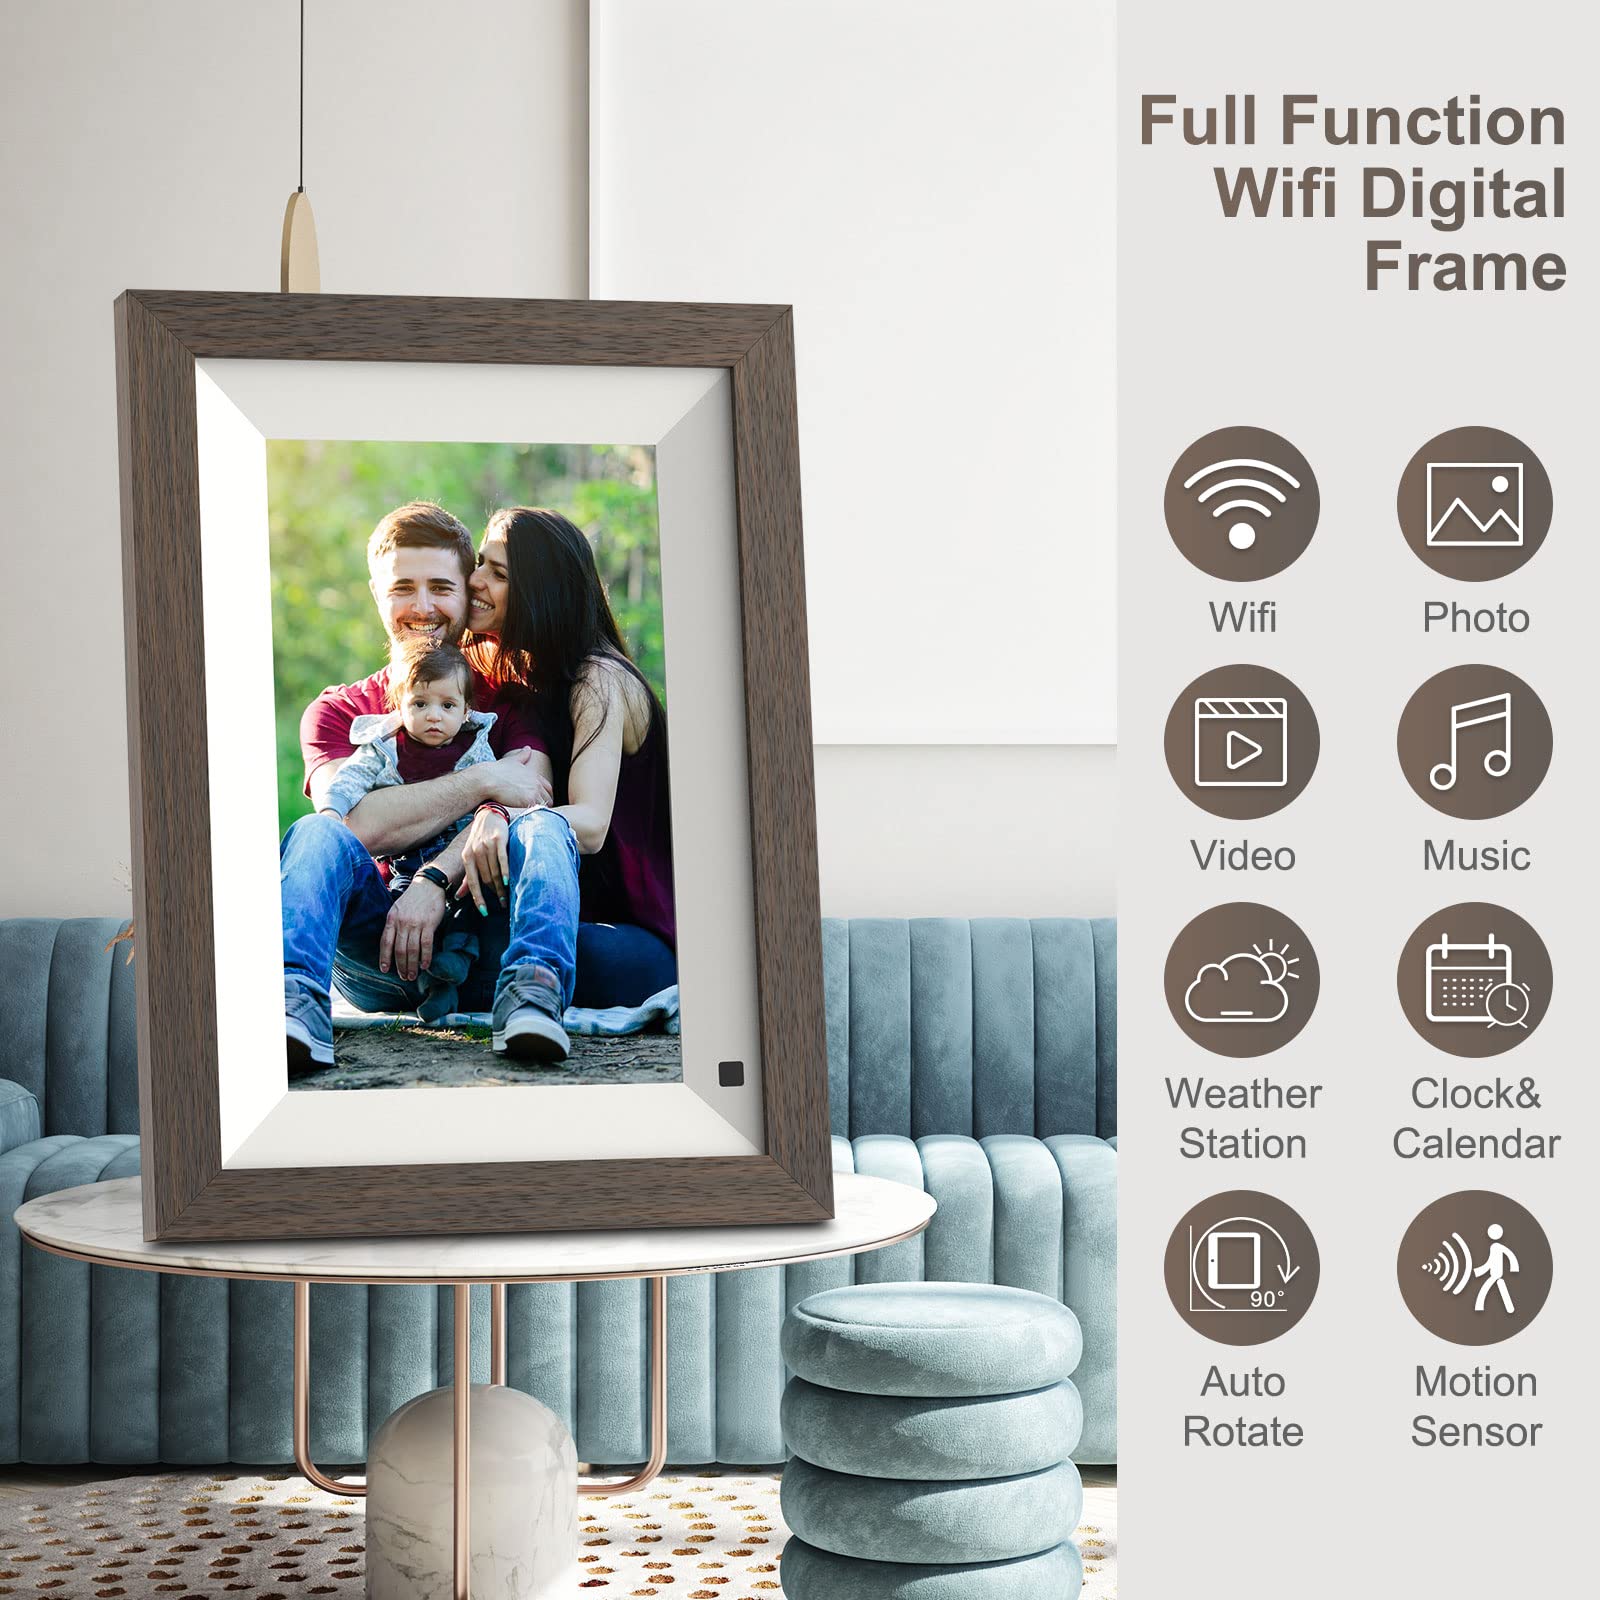 Mua Fullja Digital Photo Frame 8-inch IPS Touch Screen WiFi Digital  Picture Frame Wood, 16GB, Wall Mountable, Auto Rotate, Motion Sensor, Share  PhotosVideos via App, Email, Unlimited Cloud Storage trên Amazon